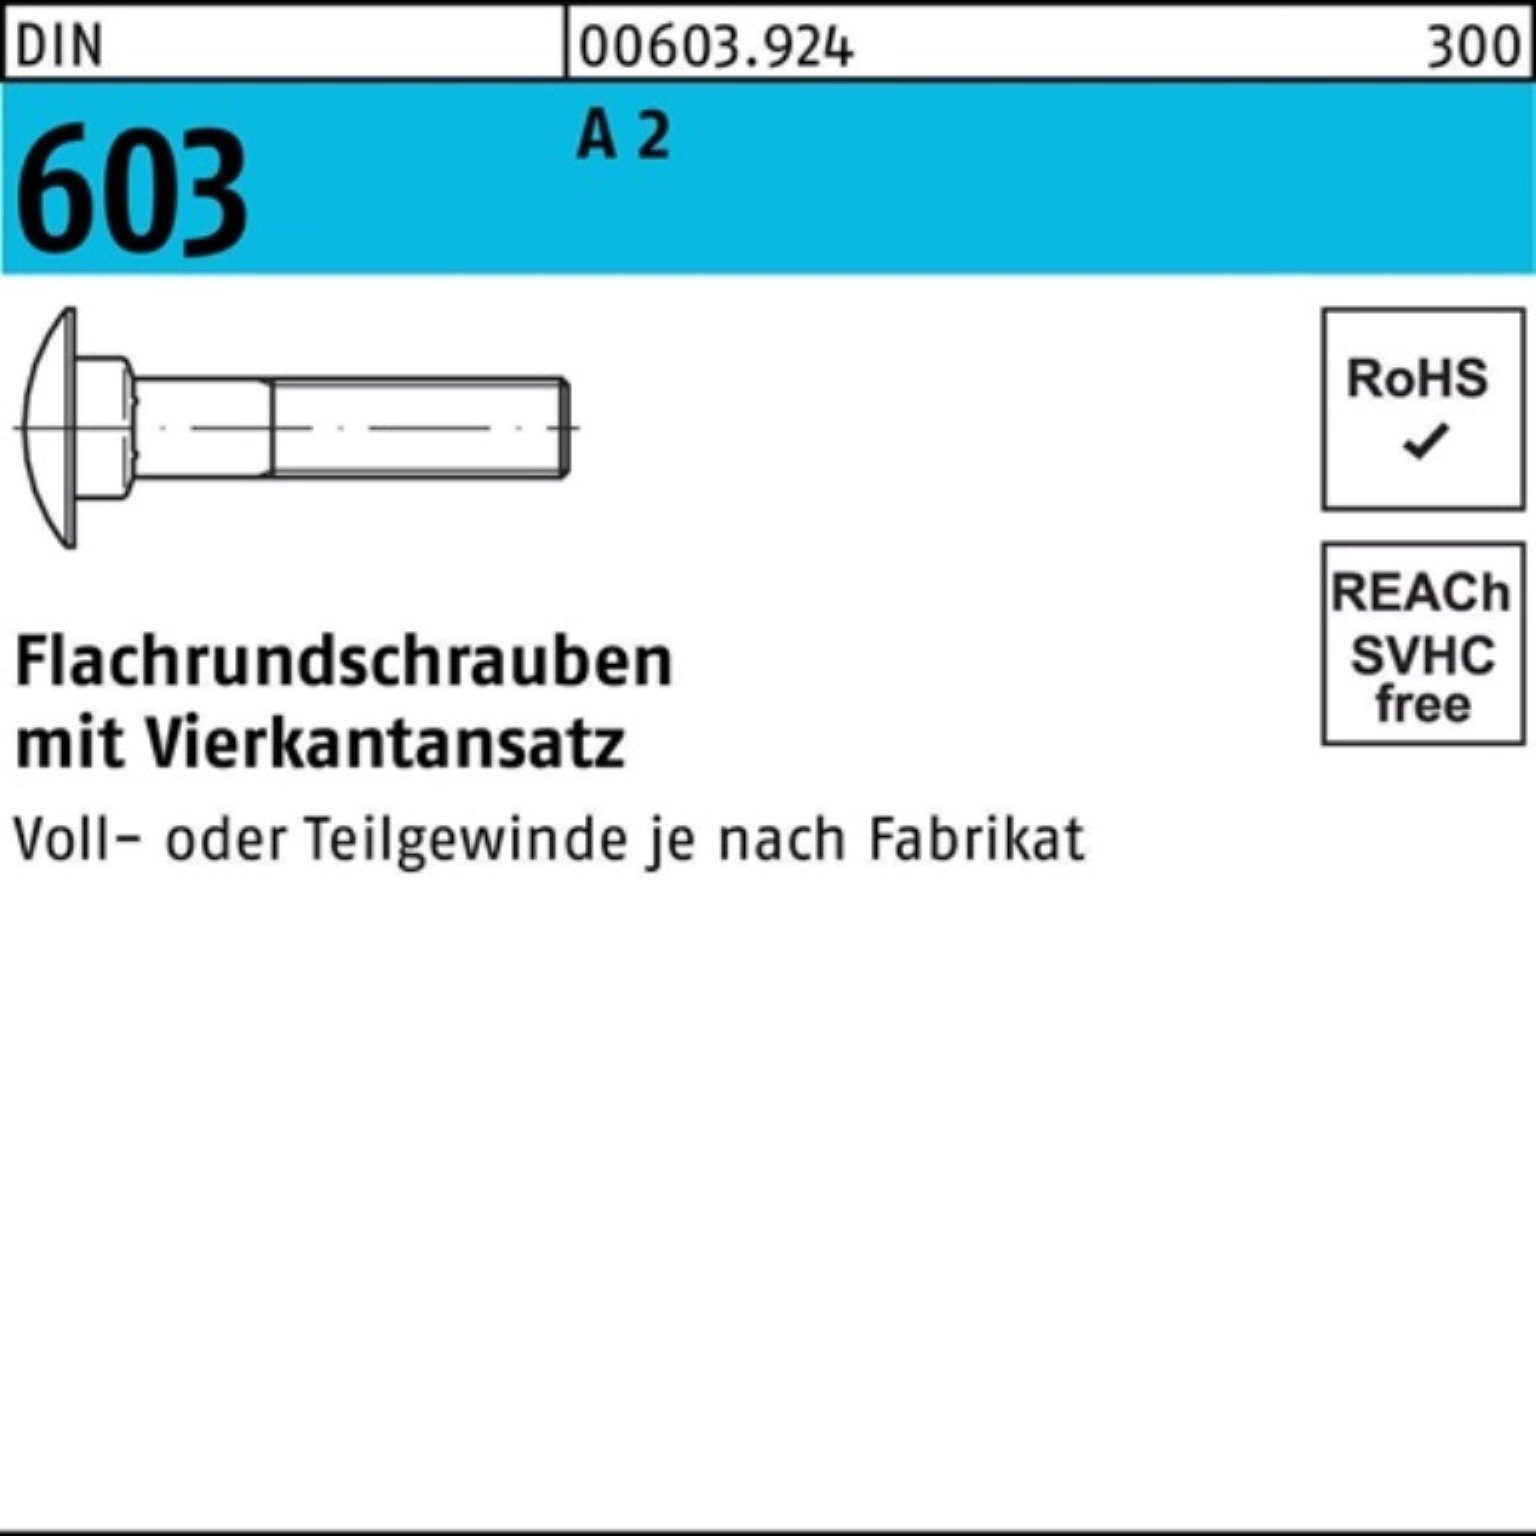 Flachrundschraube Schraube 100 2 35 Vierkantansatz 603 Pack Reyher A DIN St 100er M8x